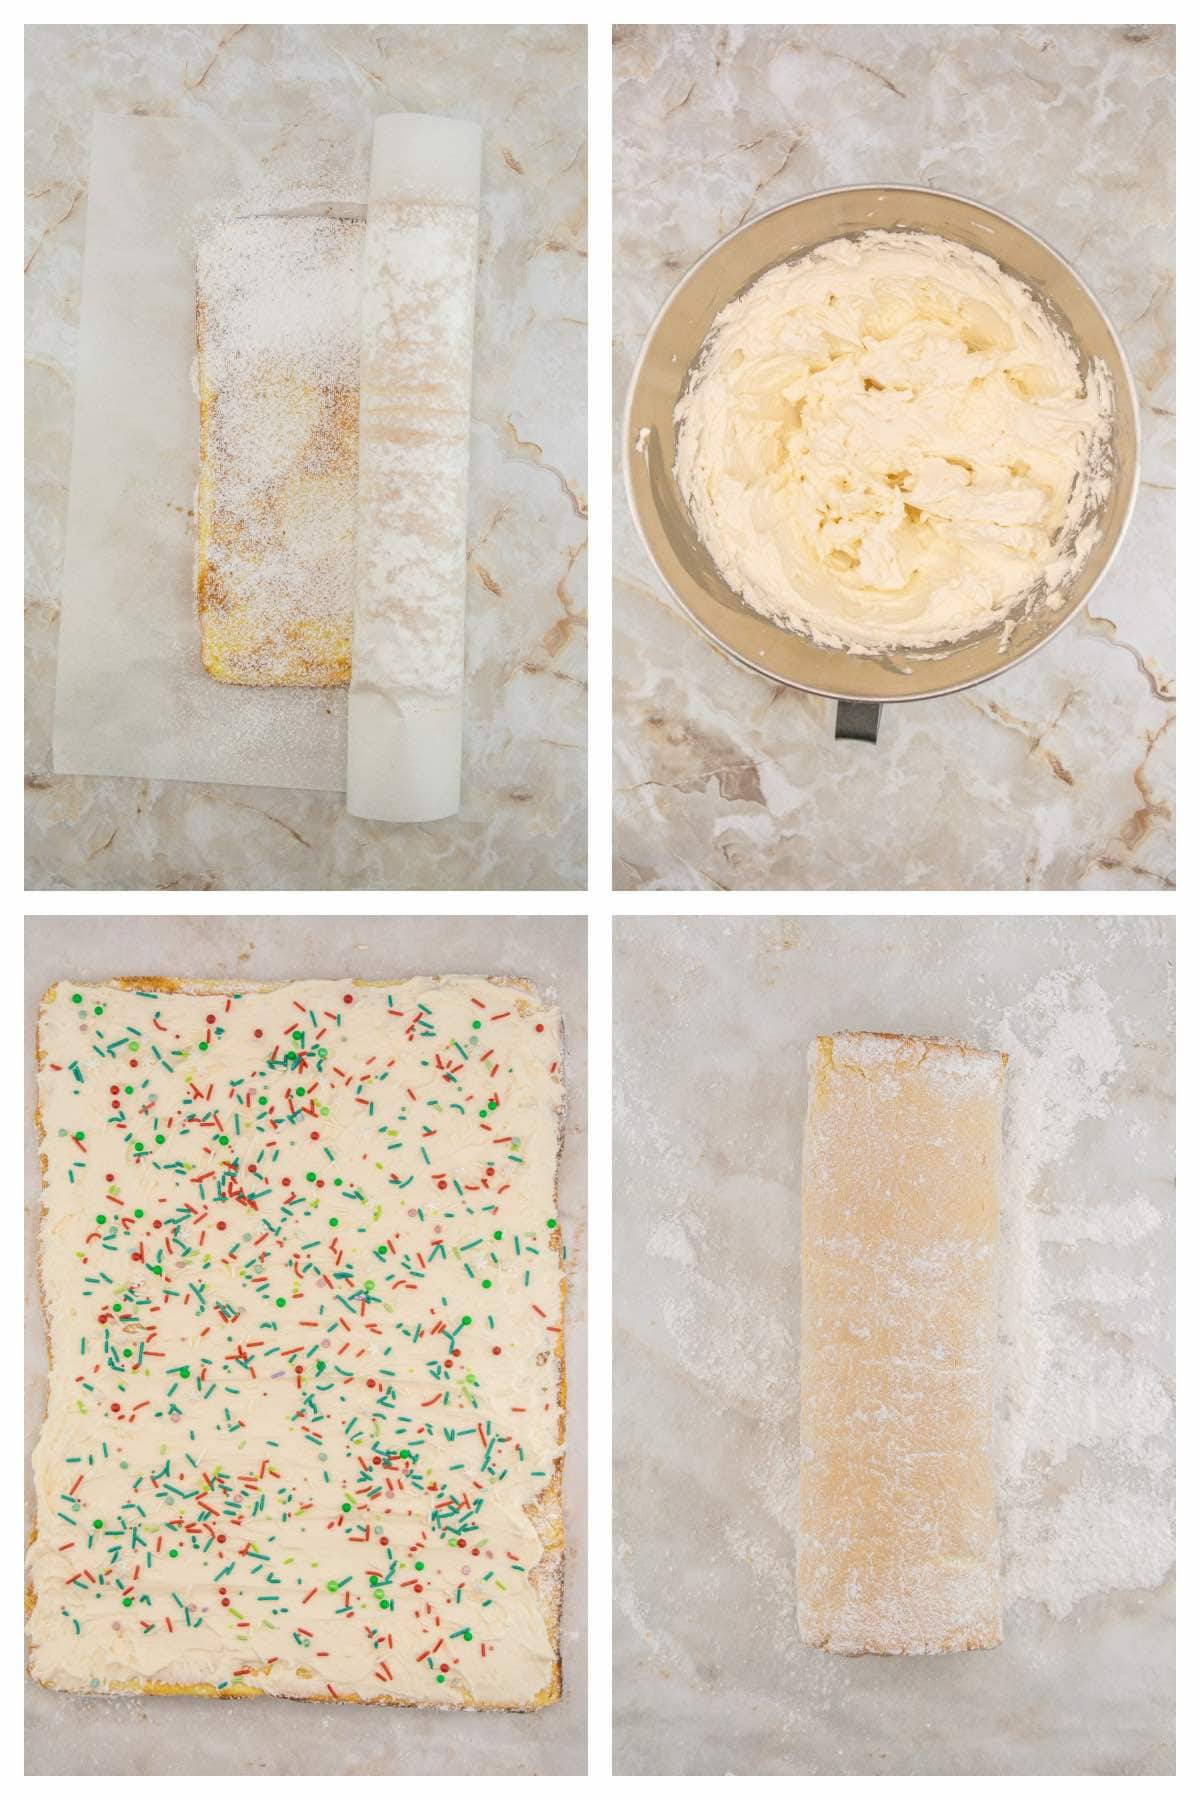 How to make vanilla cake roll 